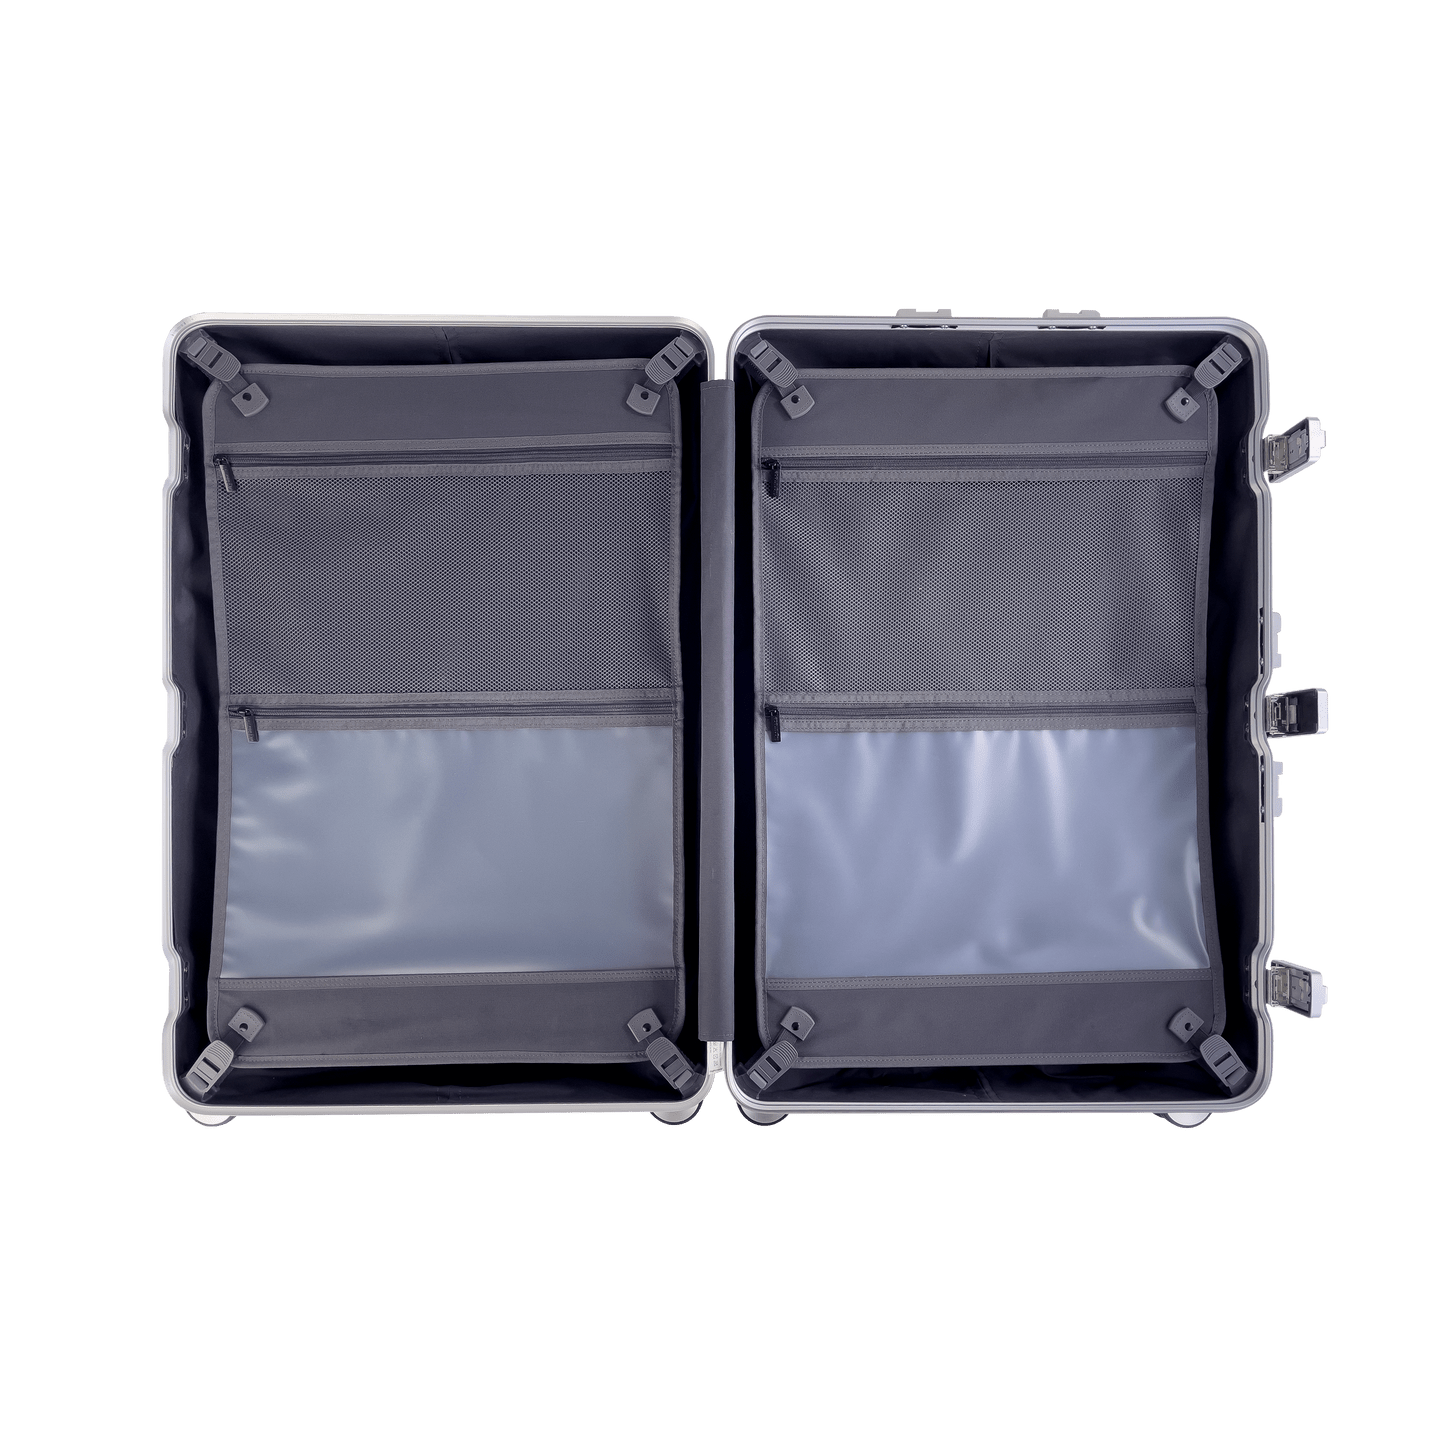 Flightmode Luggage & Bags Flightmode Travel Suitcase Medium- Silver